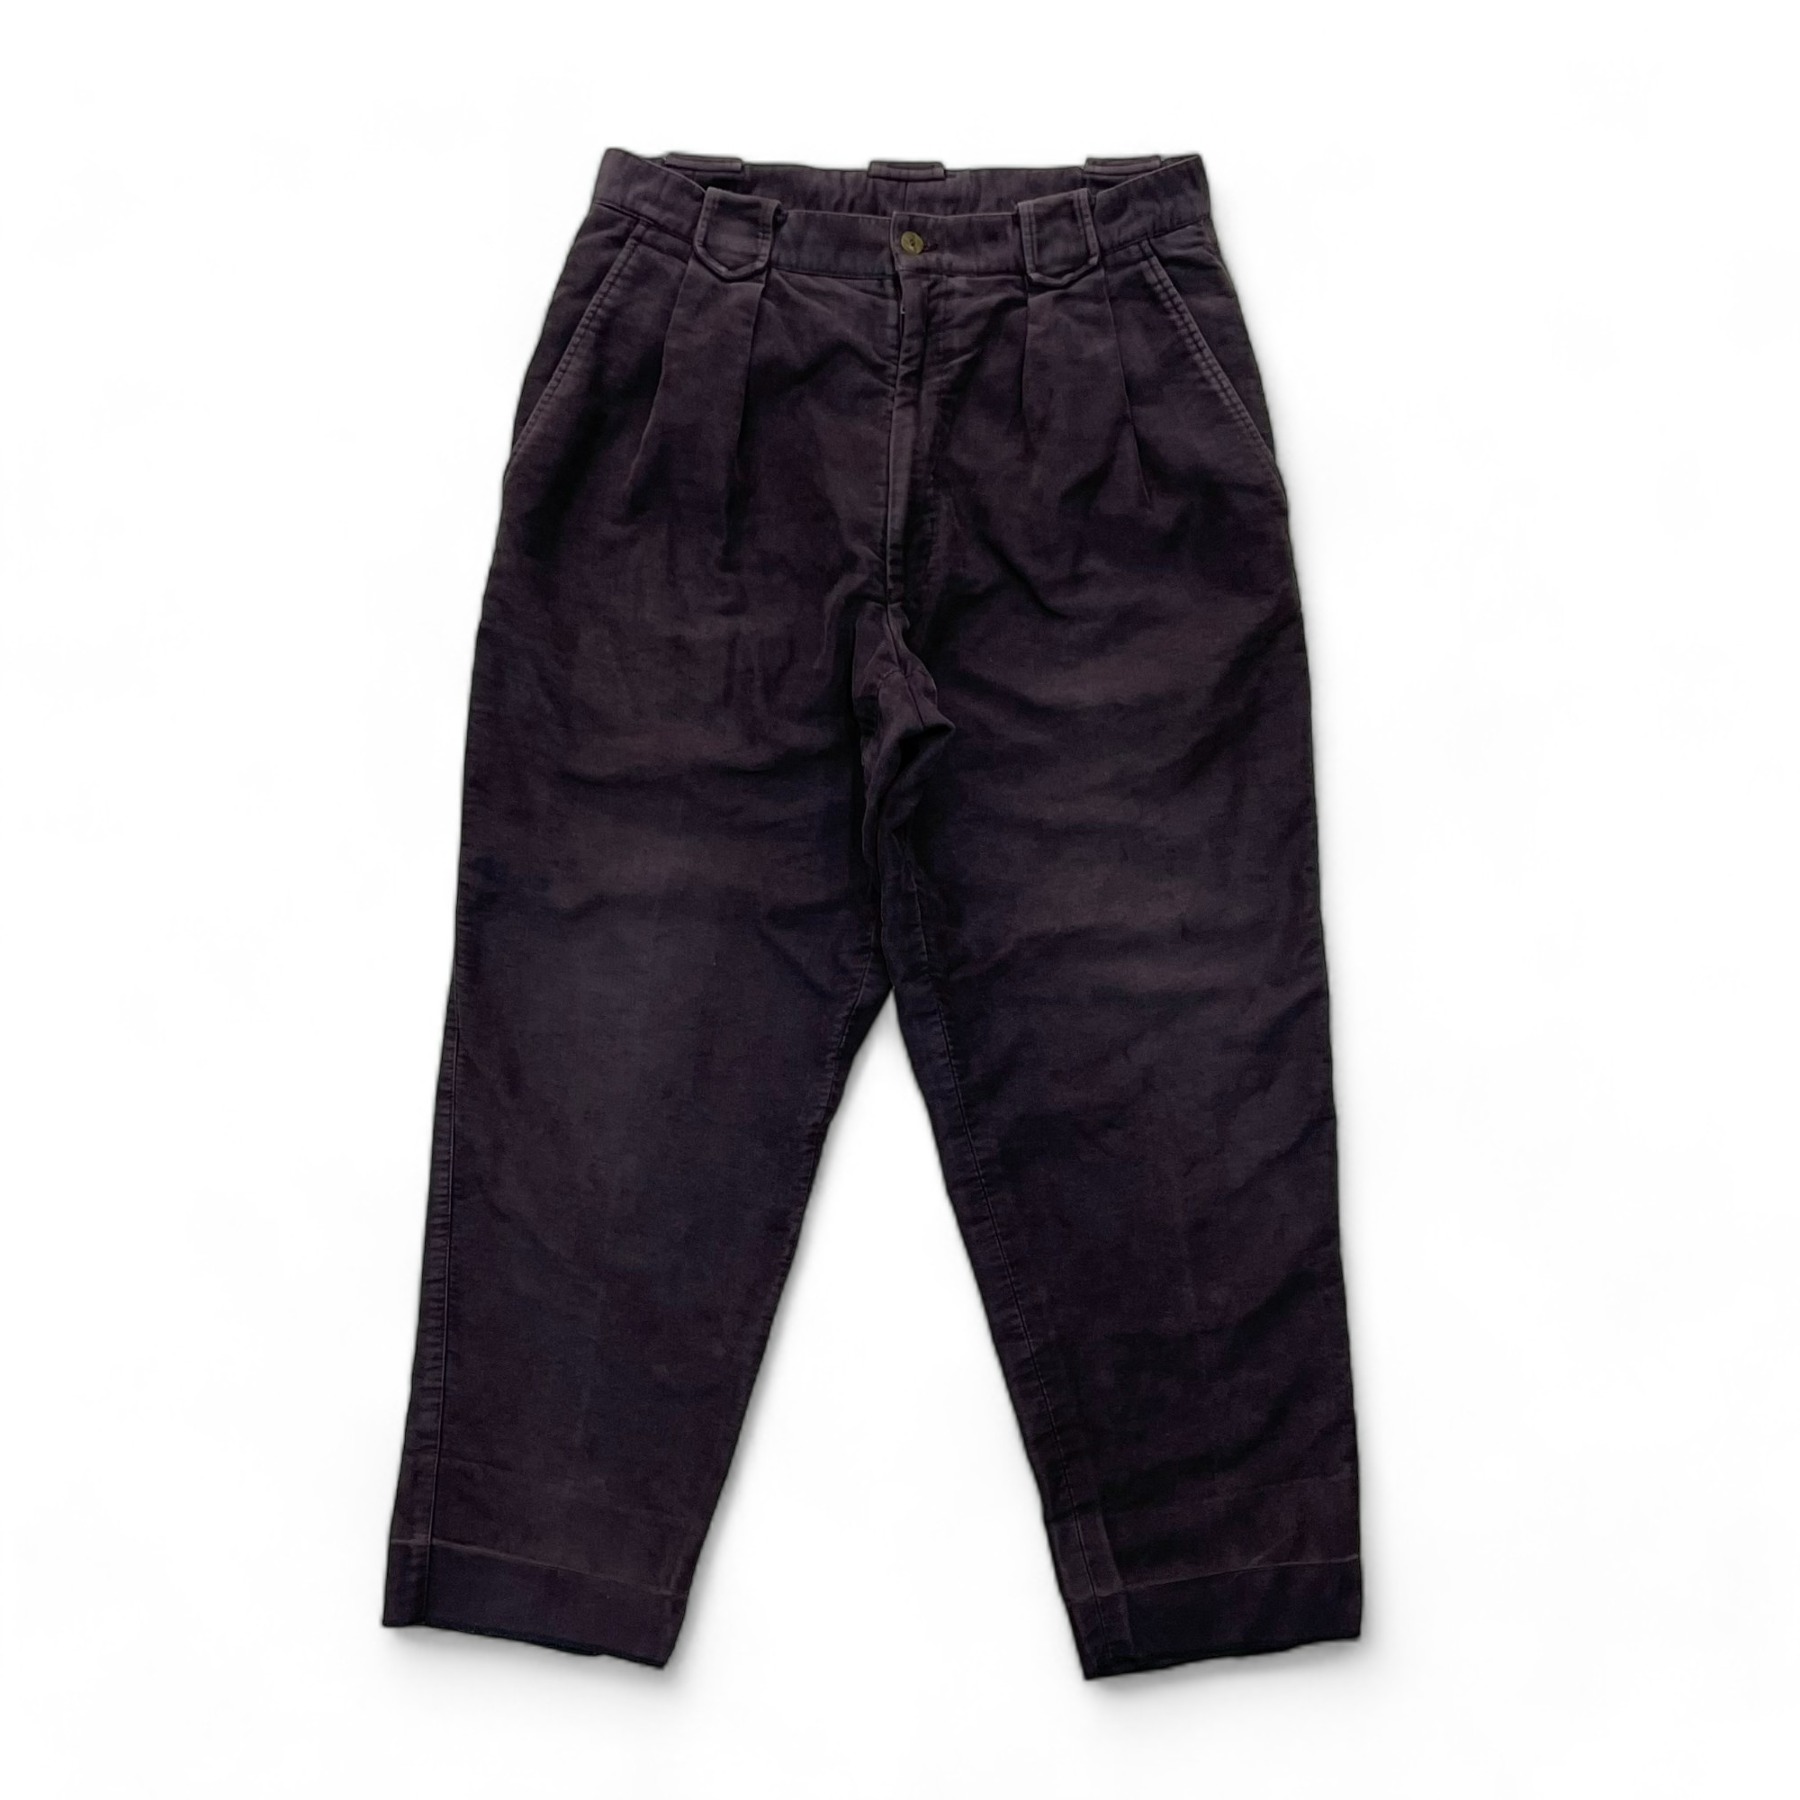 Giorgio Armani Moleskin Pants (Made in ITALY) - 32inch